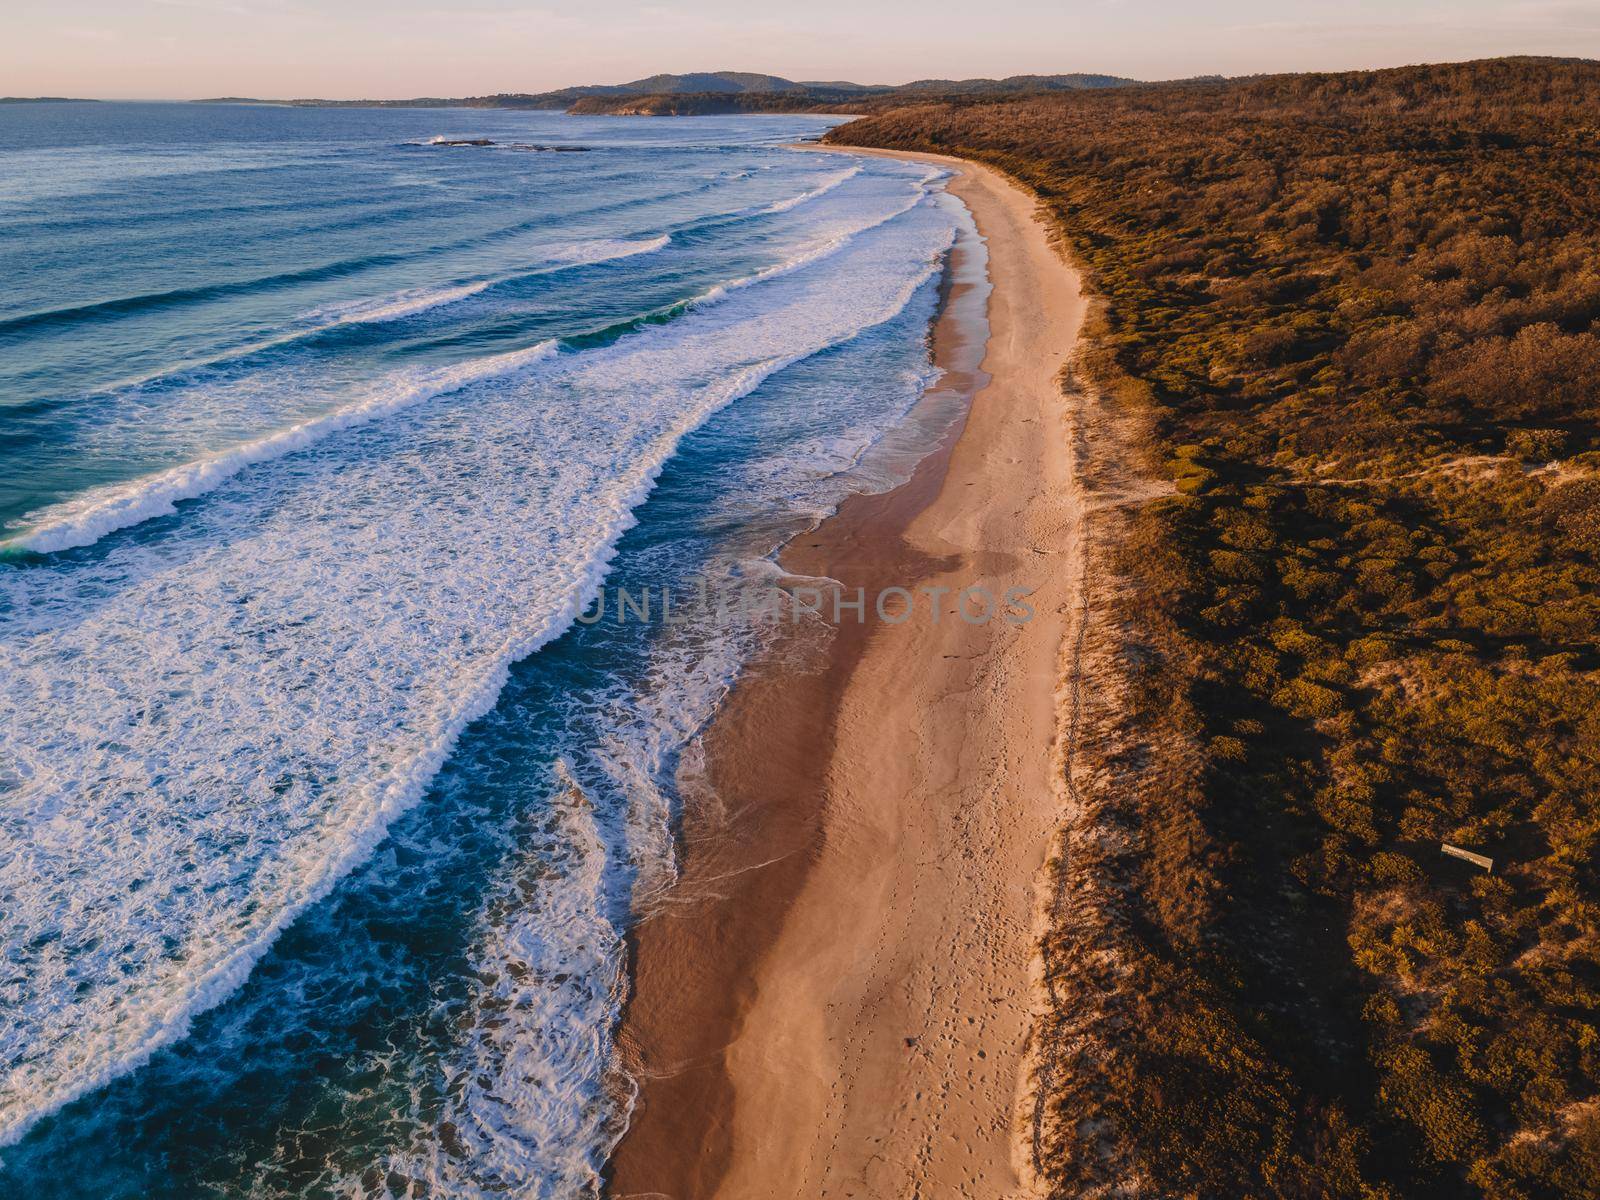 Lake Tabourie beach, Australia. High quality photo